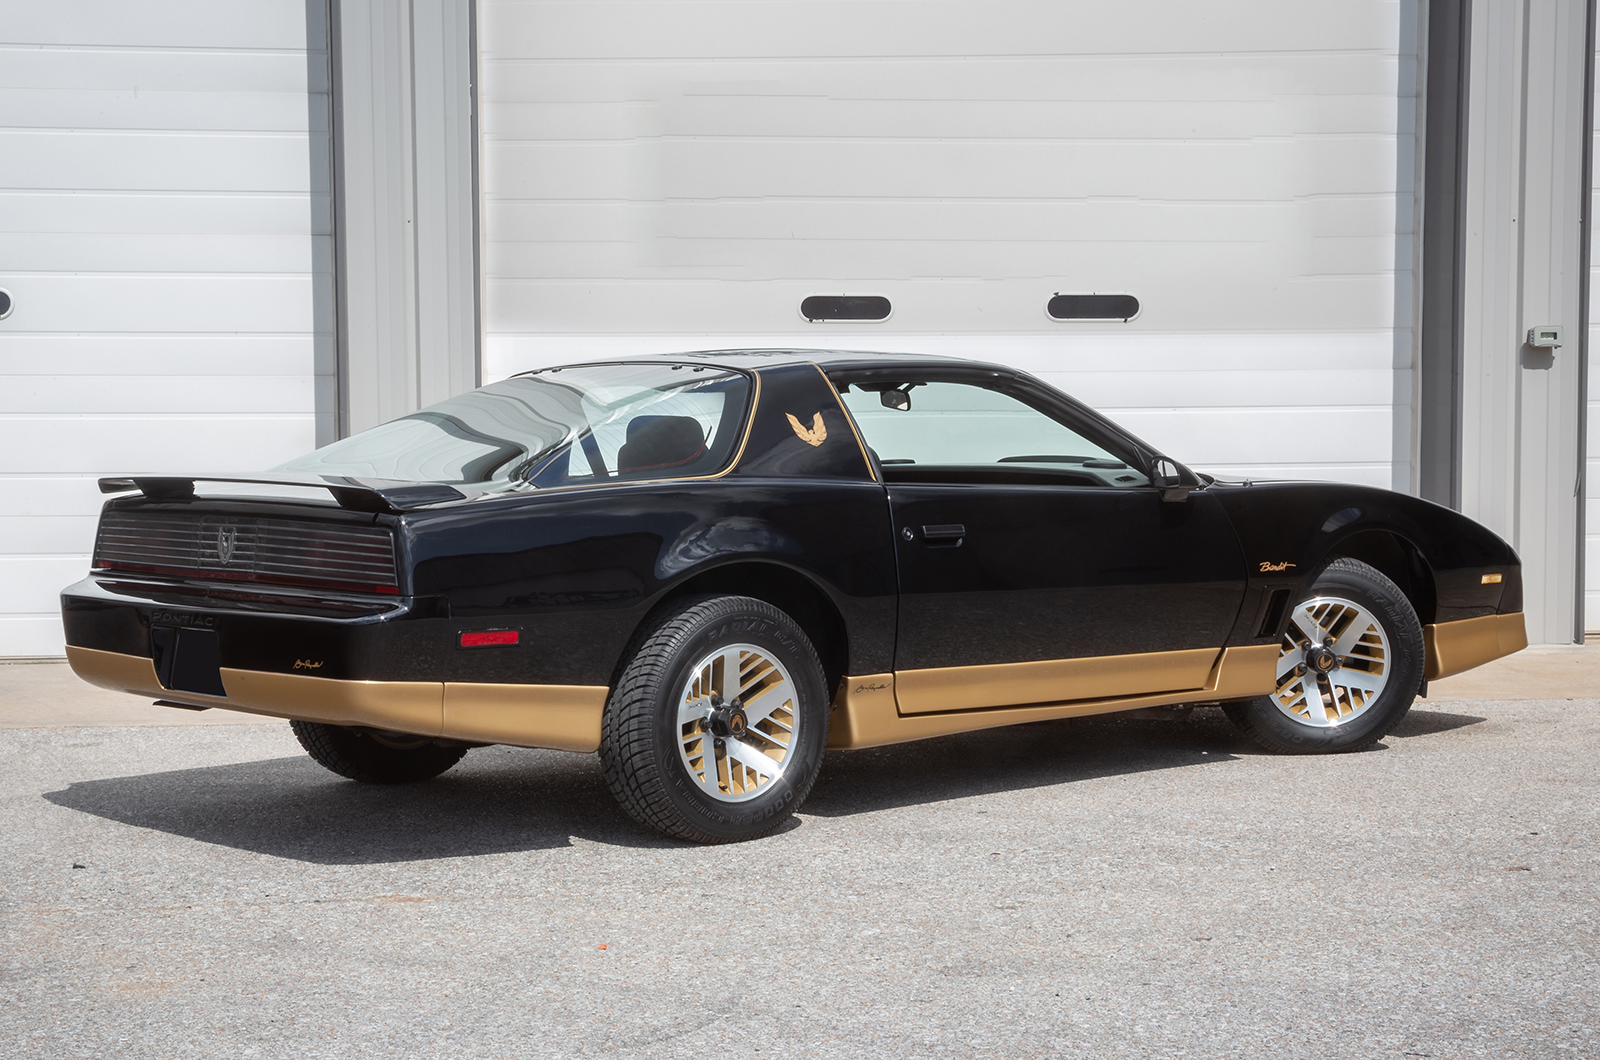 Classic & Sports Car – Burt Reynolds' cars will be auctioned next Saturday